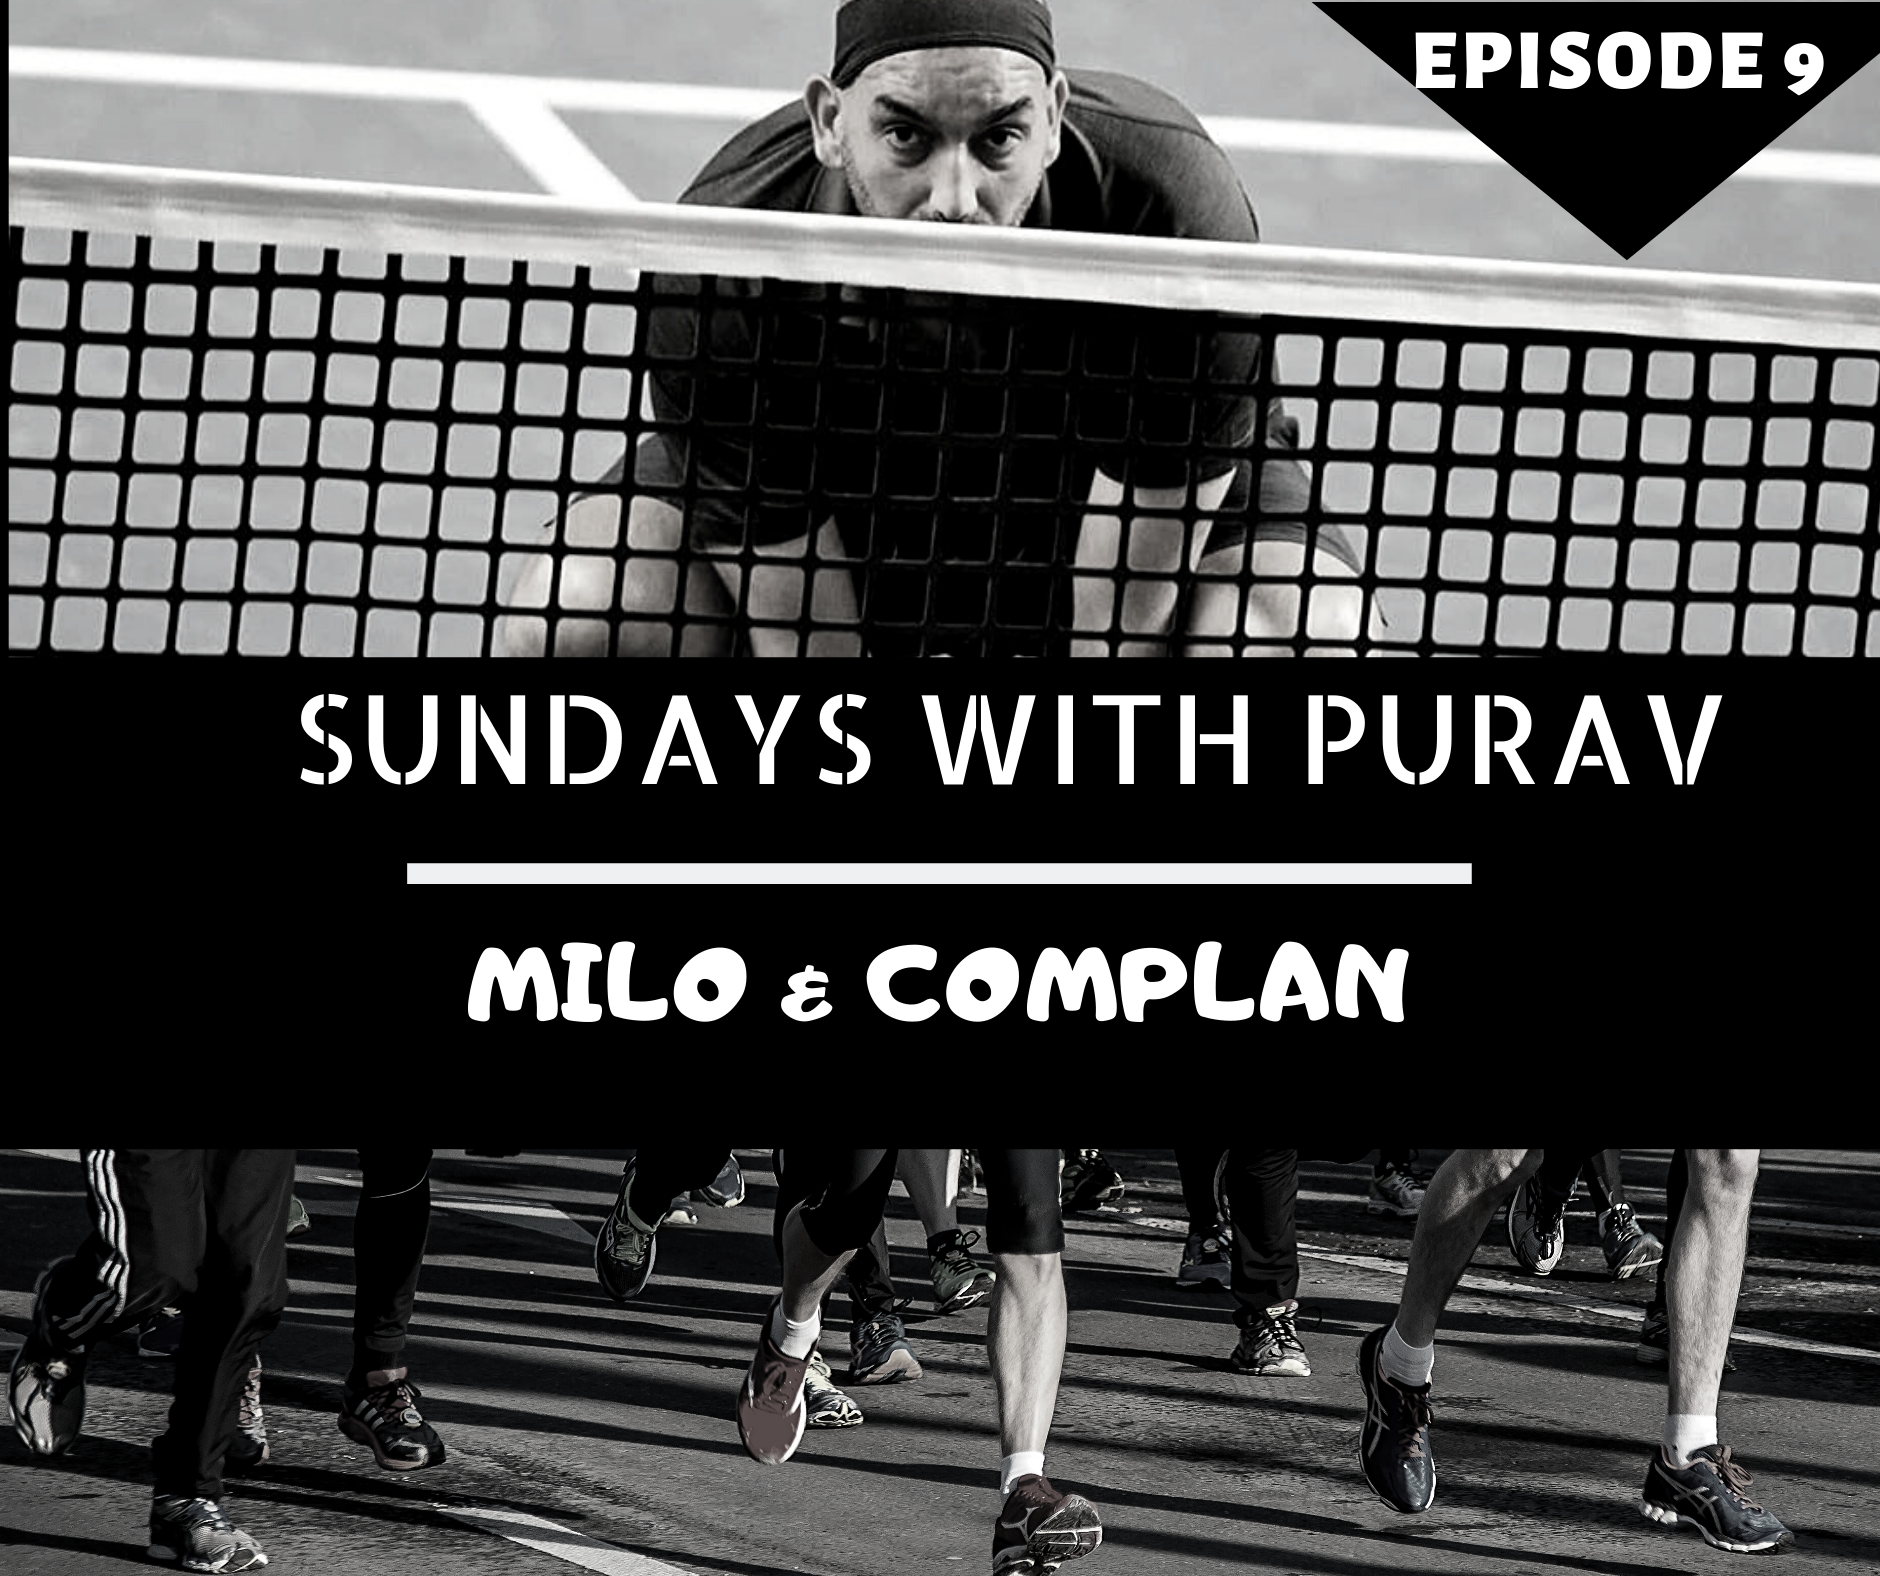 Sundays with Purav : Episode 9 – “Milo & Complan”